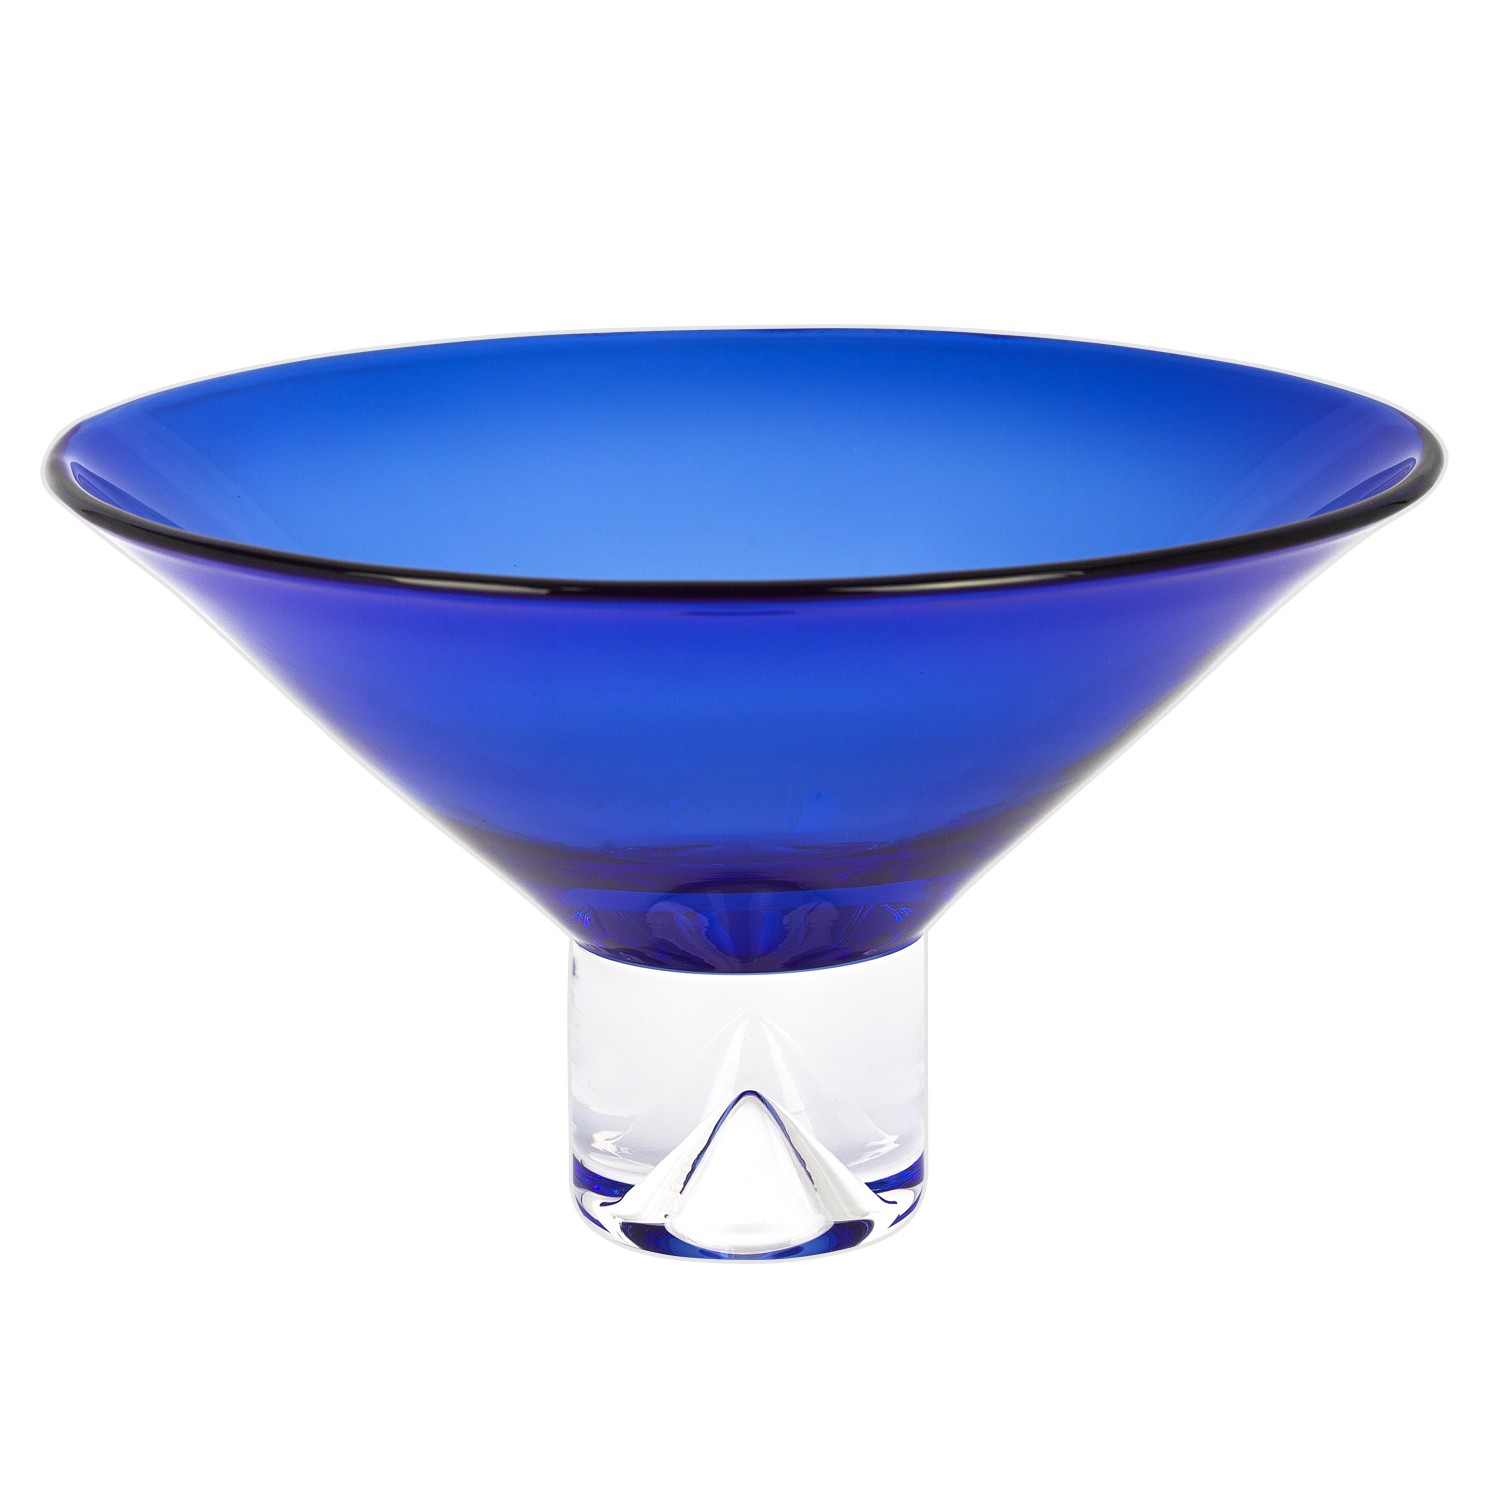 12" Mouth Blown Crystal Cobalt Blue Centerpiece Bowl